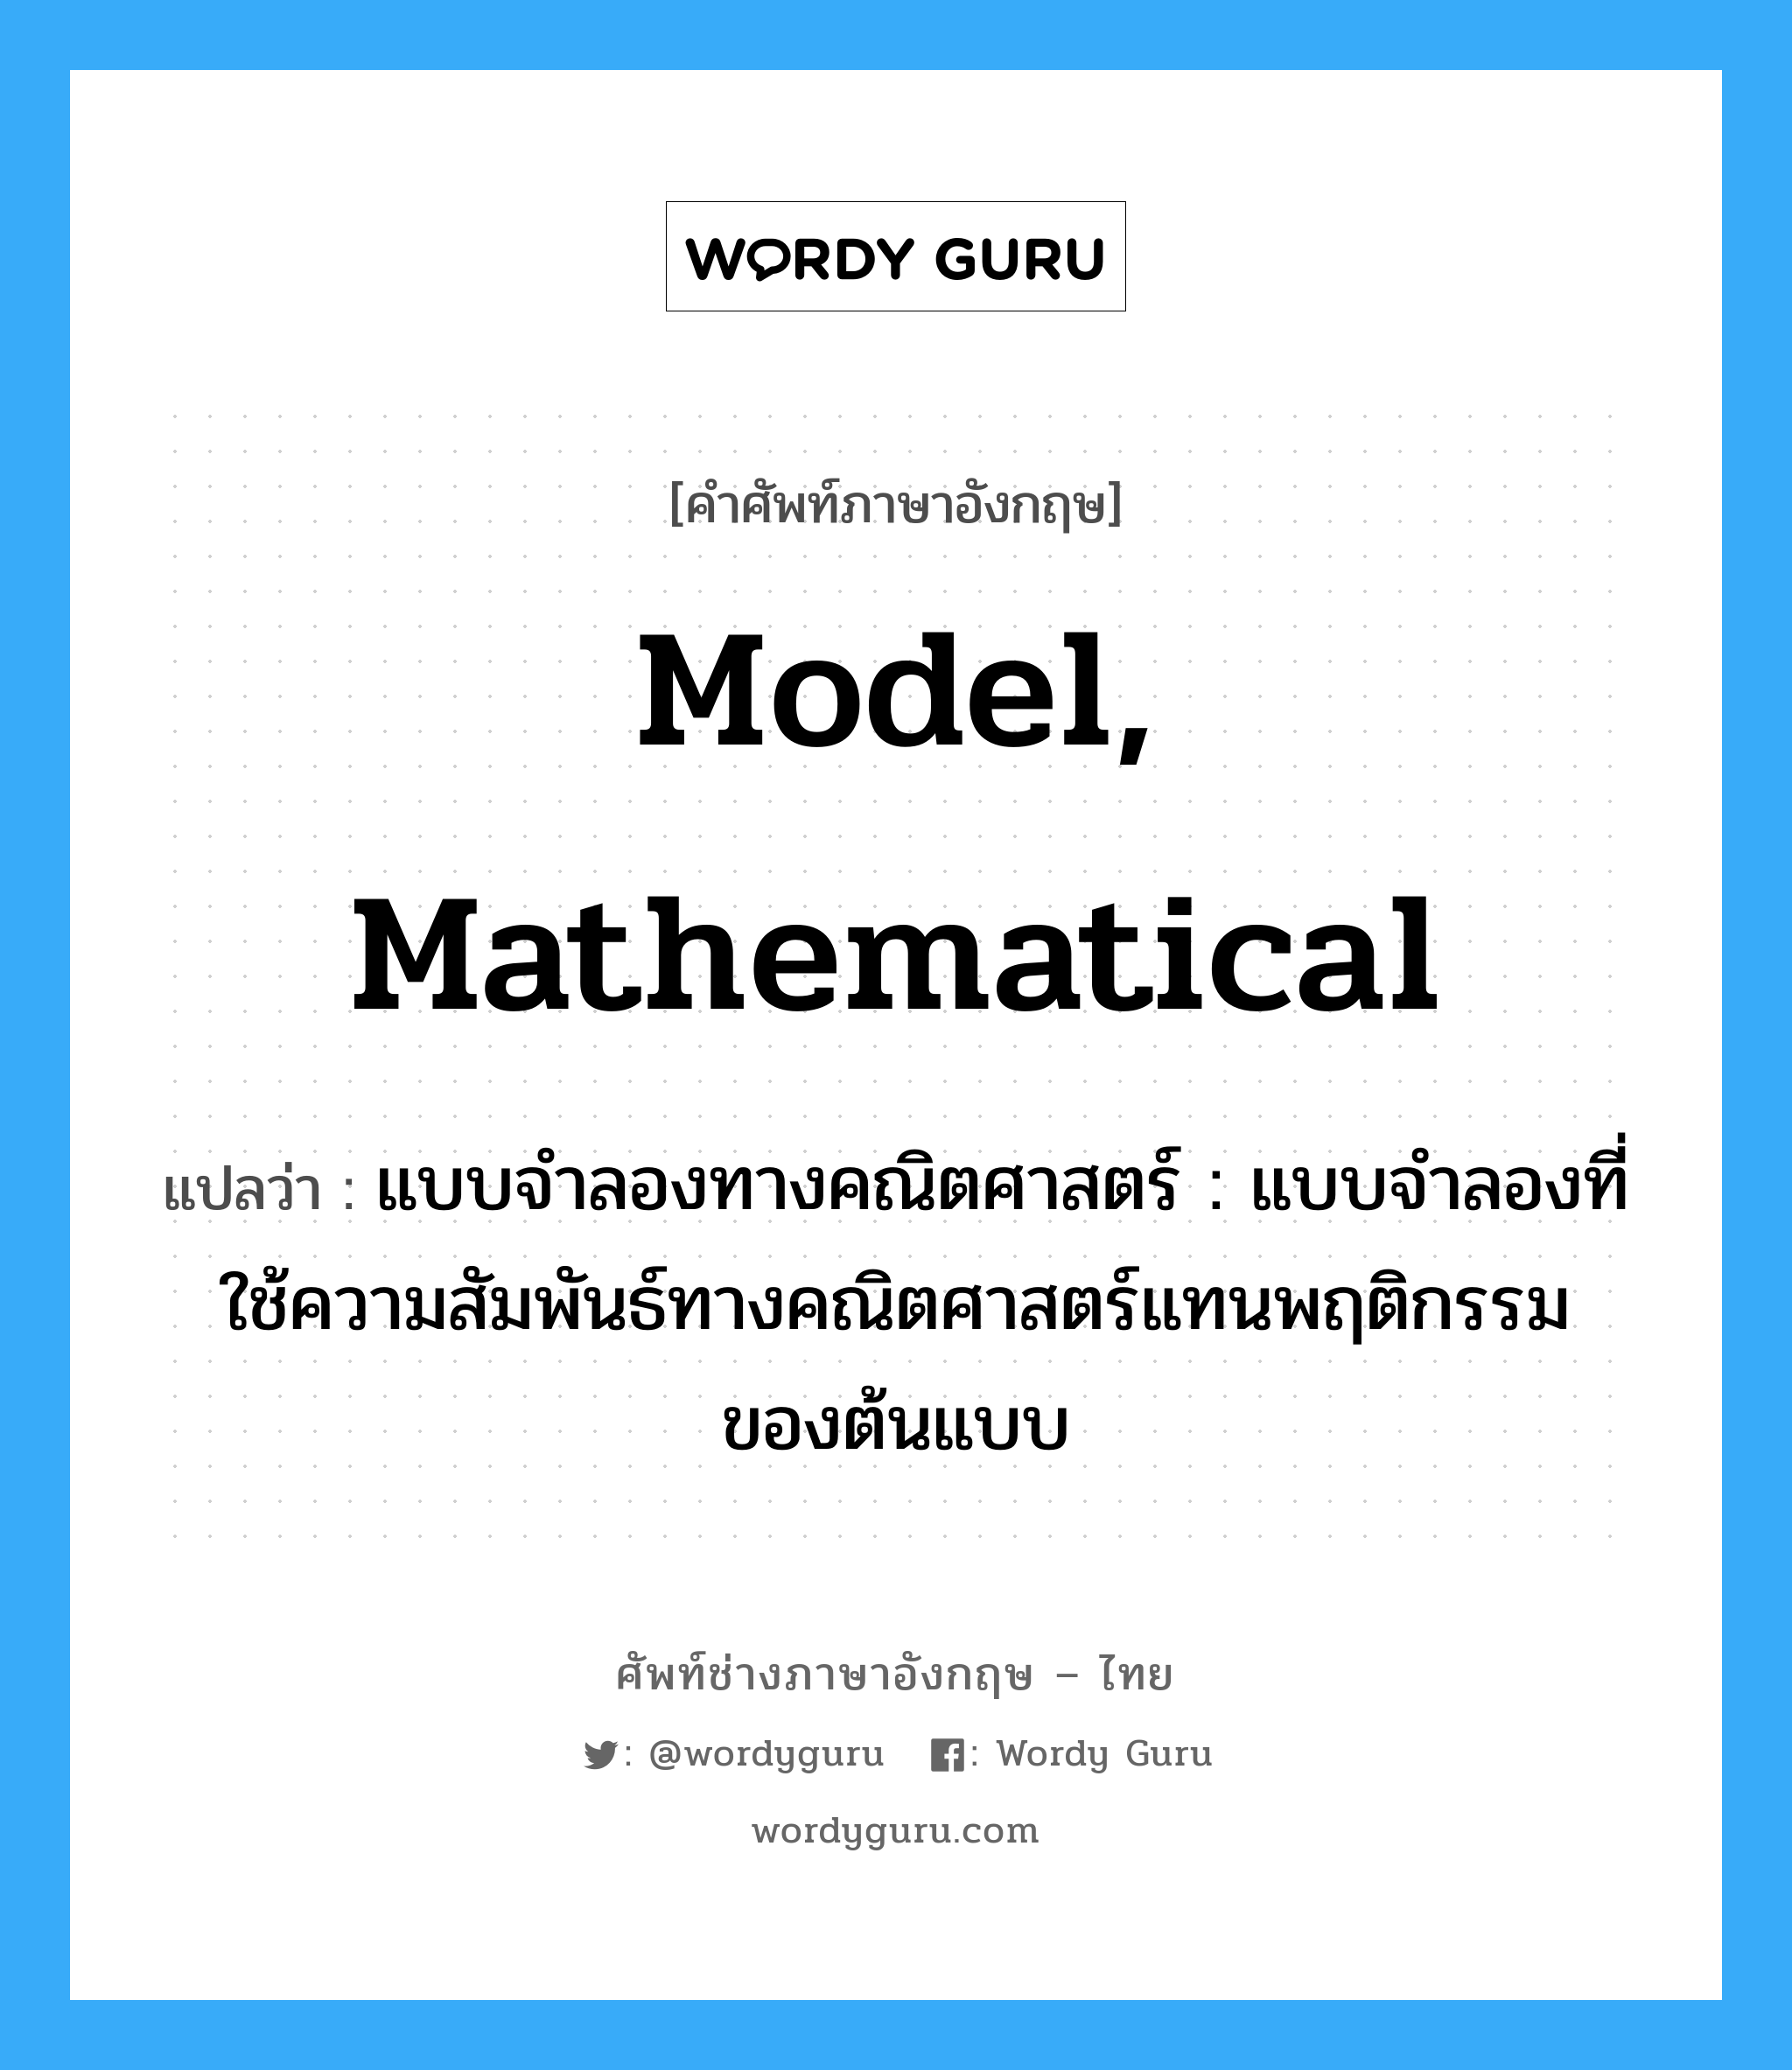 model, mathematical แปลว่า?, คำศัพท์ช่างภาษาอังกฤษ - ไทย model, mathematical คำศัพท์ภาษาอังกฤษ model, mathematical แปลว่า แบบจำลองทางคณิตศาสตร์ : แบบจำลองที่ใช้ความสัมพันธ์ทางคณิตศาสตร์แทนพฤติกรรม ของต้นแบบ